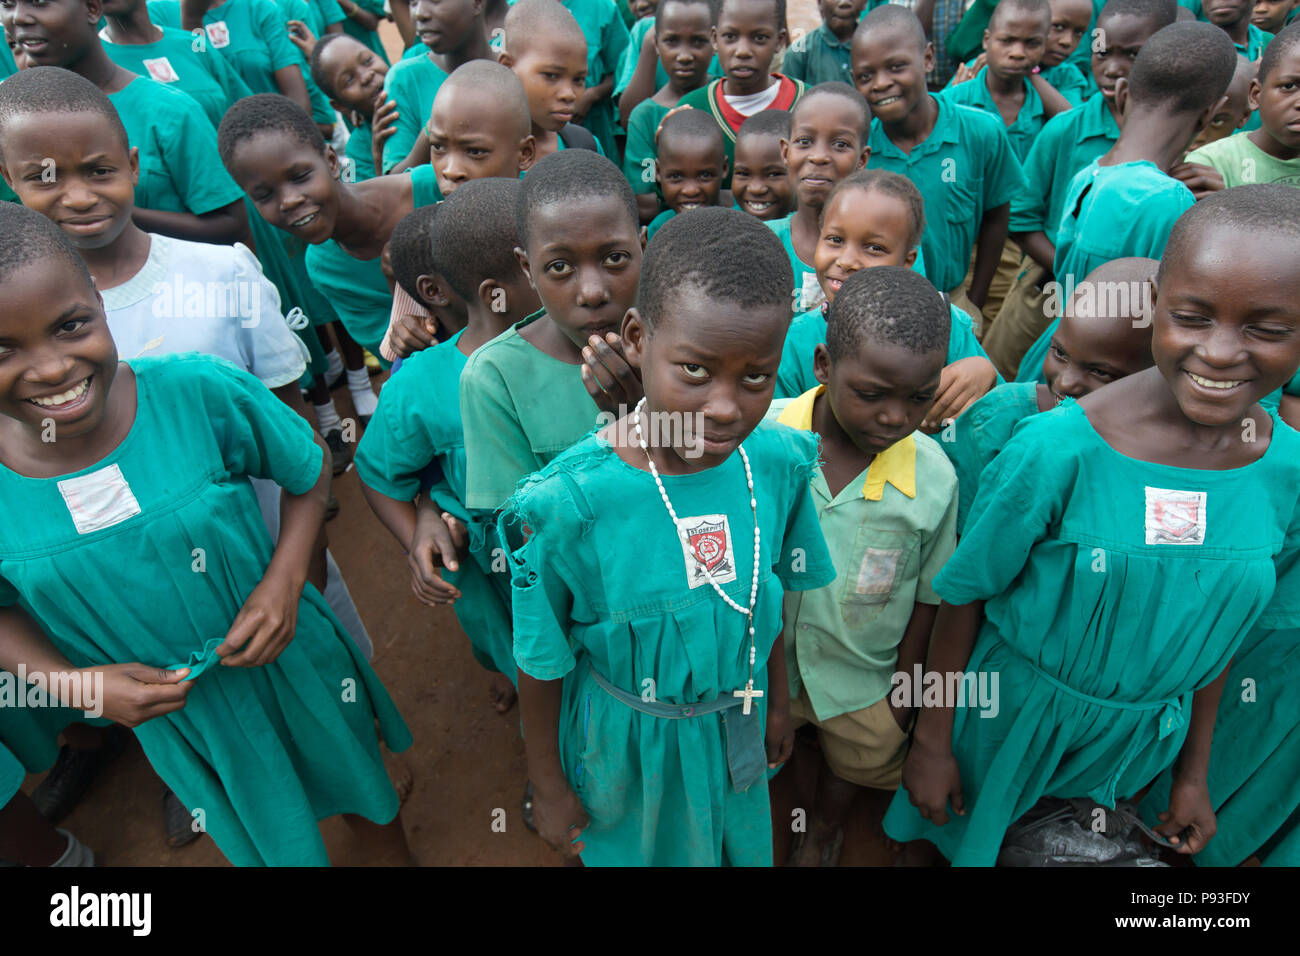 Bombo, Uganda - School appeal in the schoolyard of St. Joseph's Bombo mixed primary school. Stock Photo